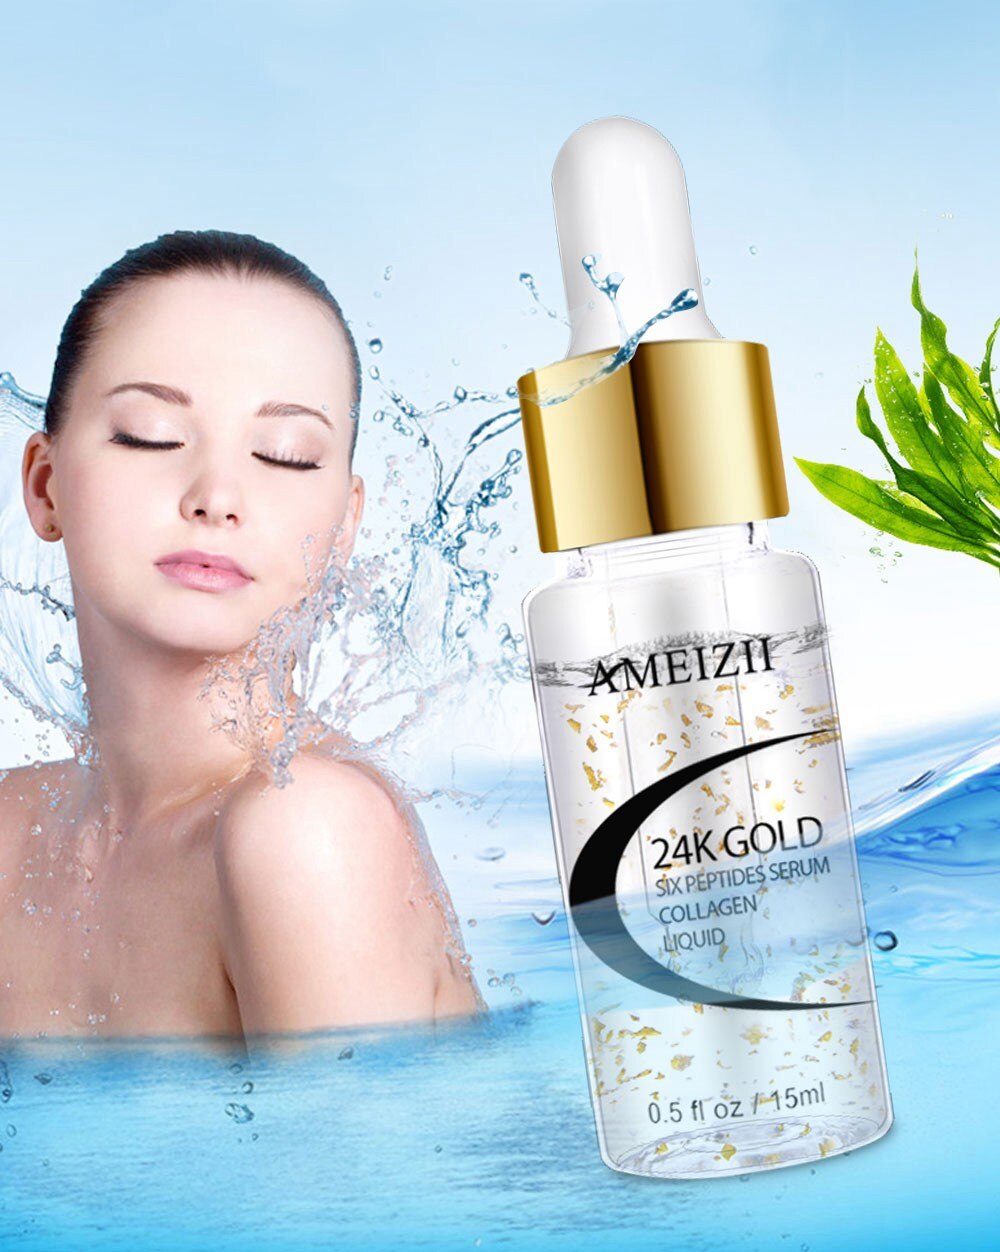 AMEIZII Snail Essence Hyaluronic Acid Serum Moisturizing Whitening Lifting Firming Essence Anti-Aging Face Skin Care Repair 1Pcs